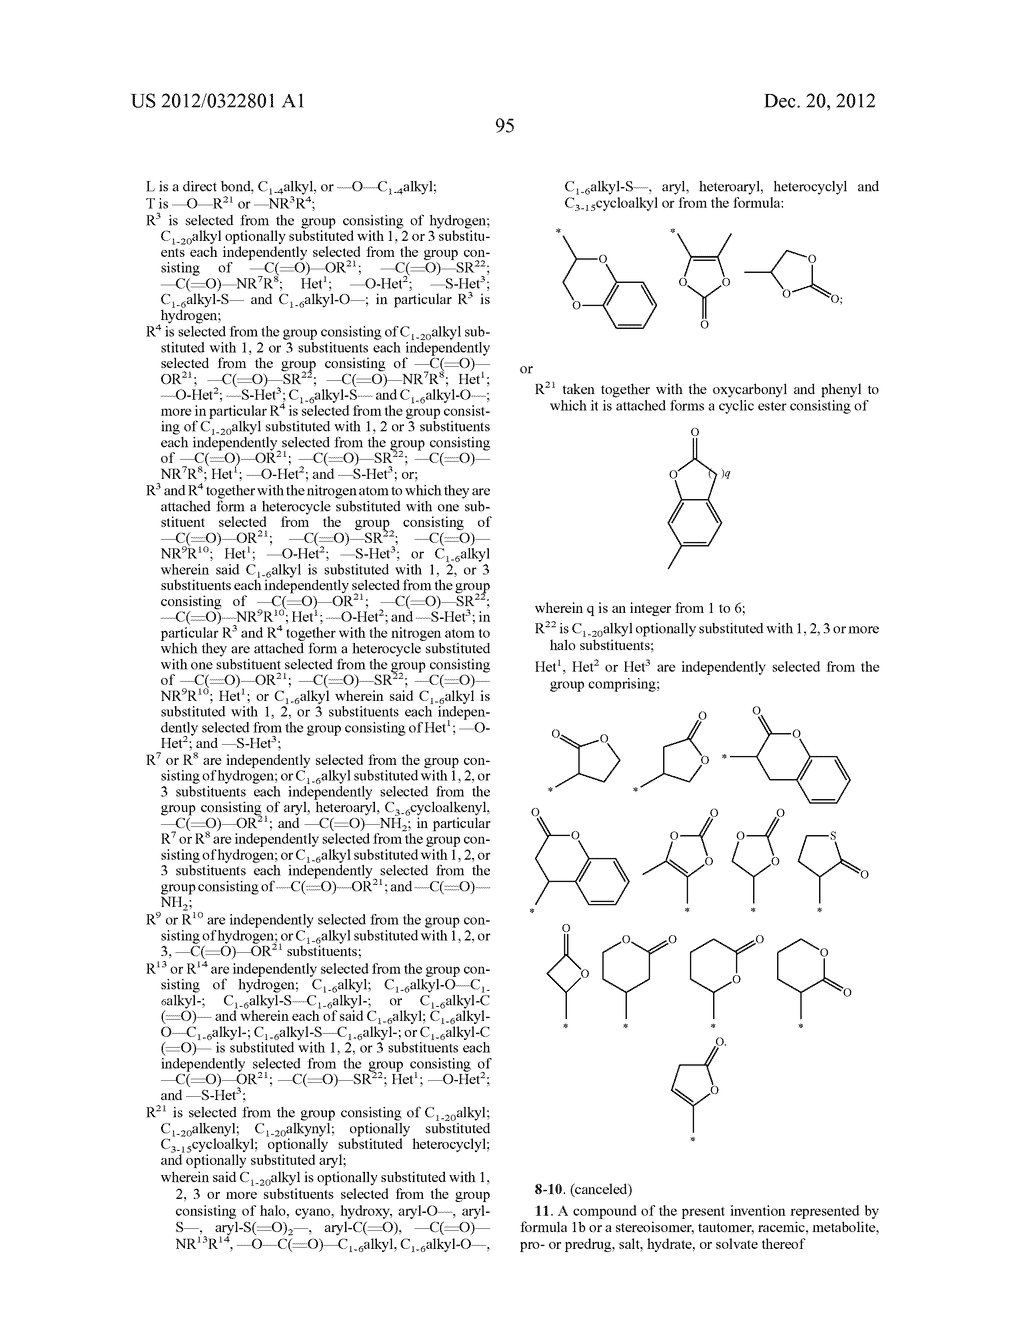 HETEROCYCLIC AMIDES AS ROCK INHIBITORS - diagram, schematic, and image 96